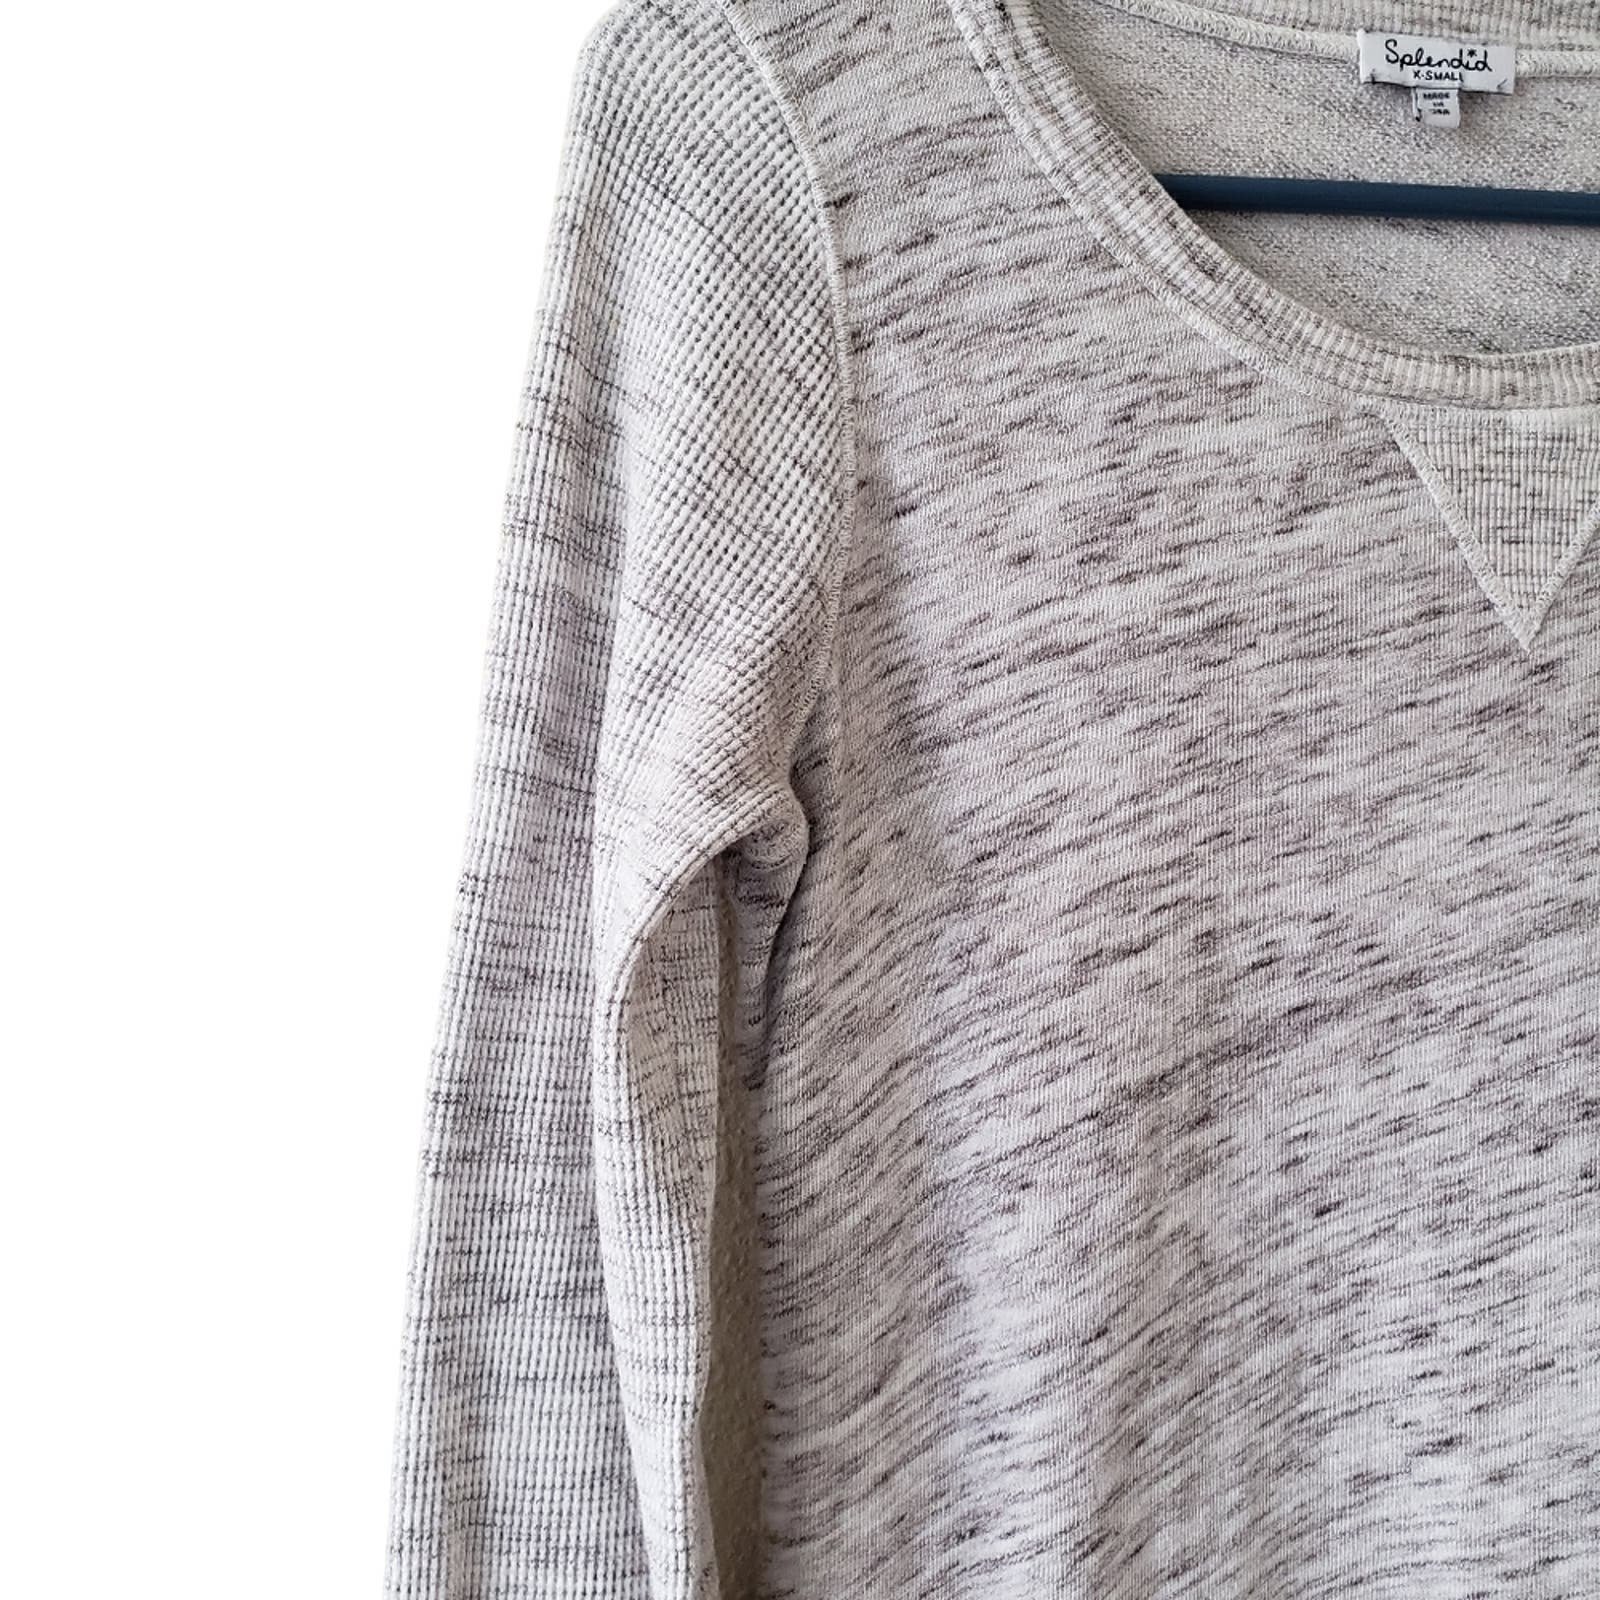 Cheap Splendid Women´s Heathered Gray Scoop Neck Long Sleeves Pullover Sweatshirt XS ndiF9wkJw Discount